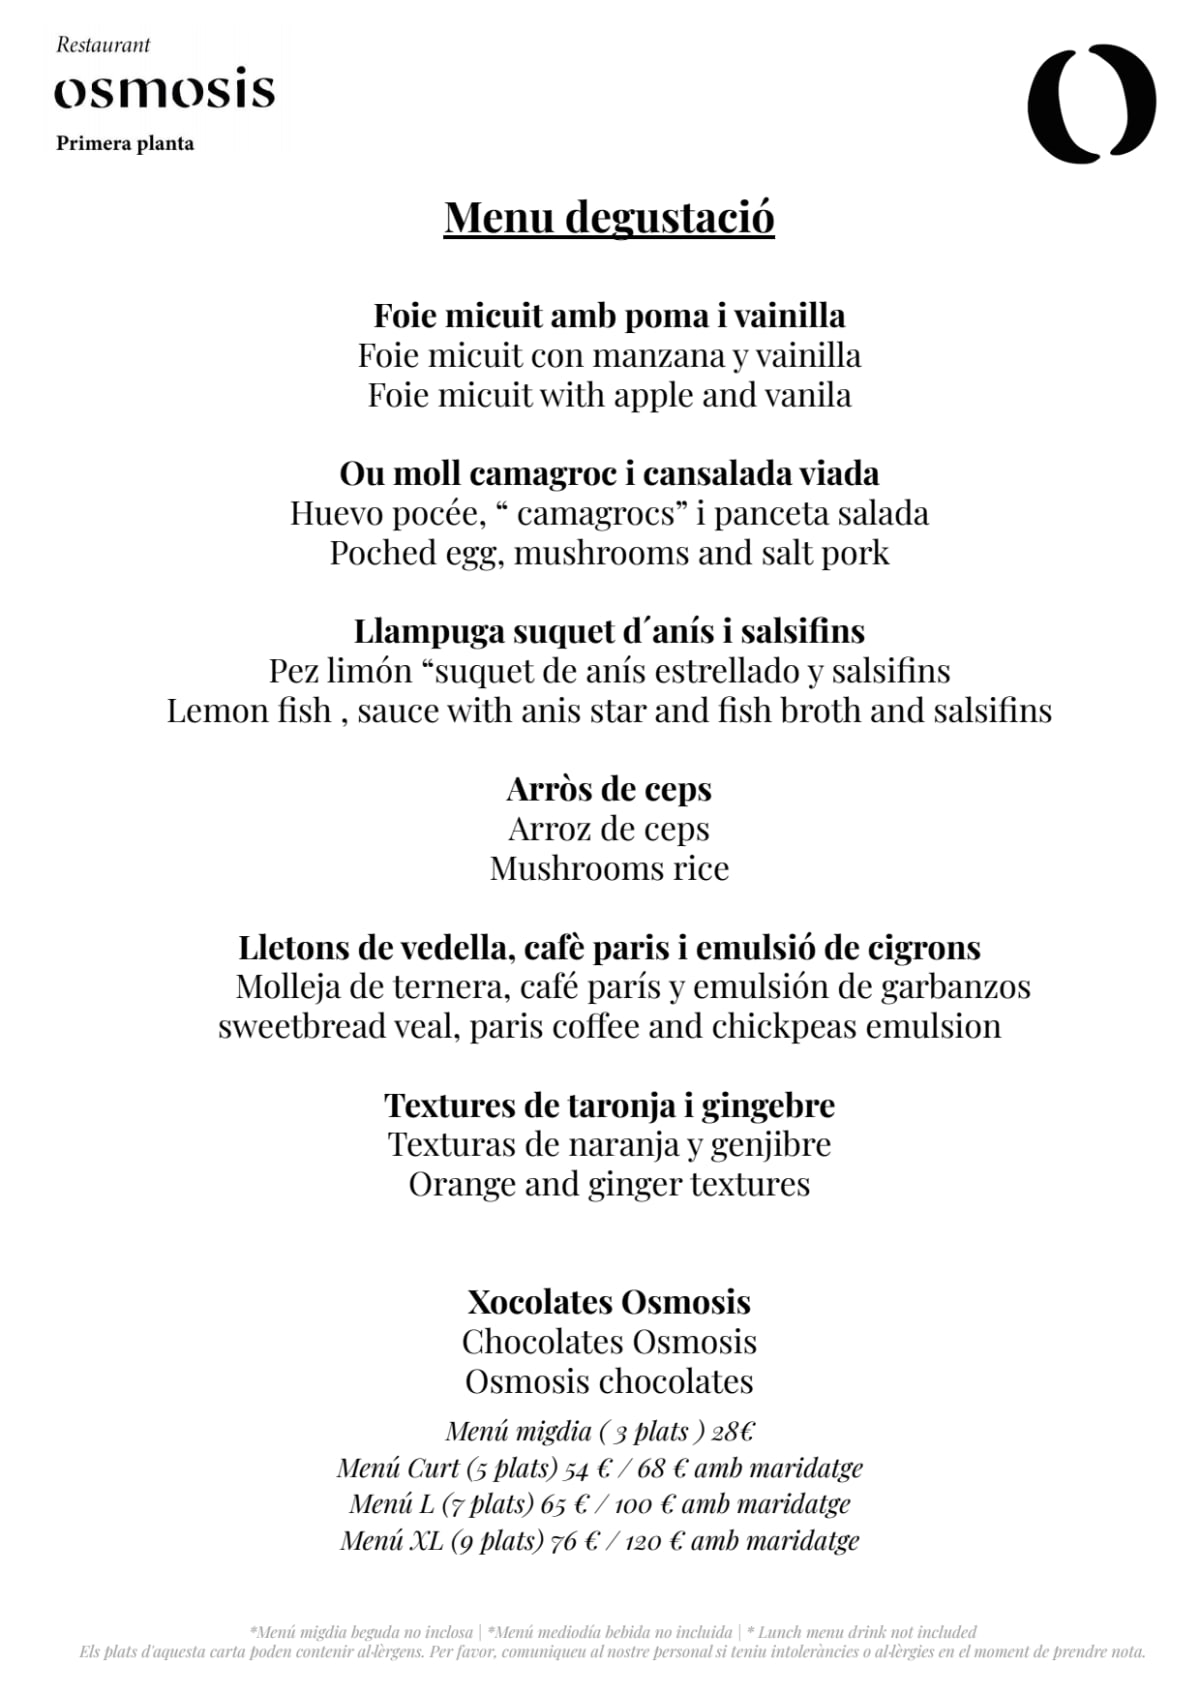 Osmosis menu